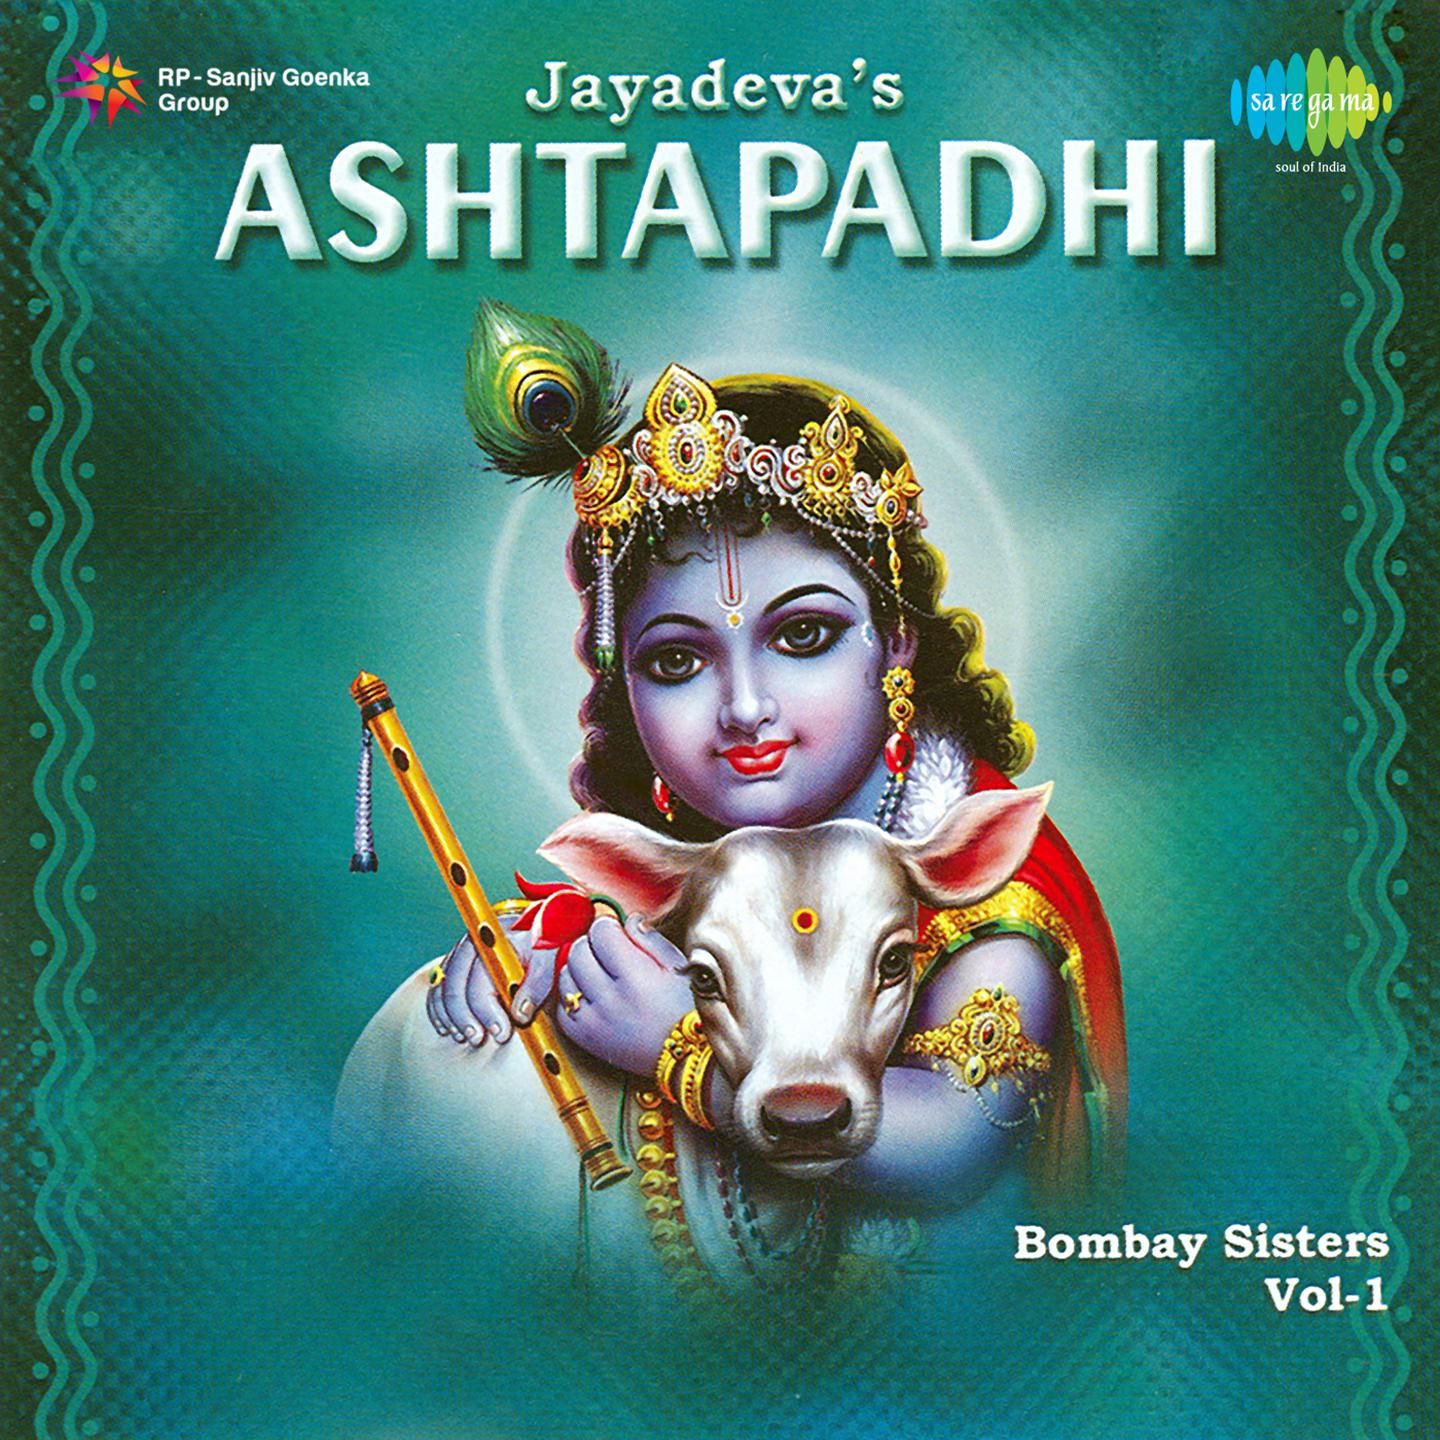 Jayadevas Ashtapadhi Volume 1